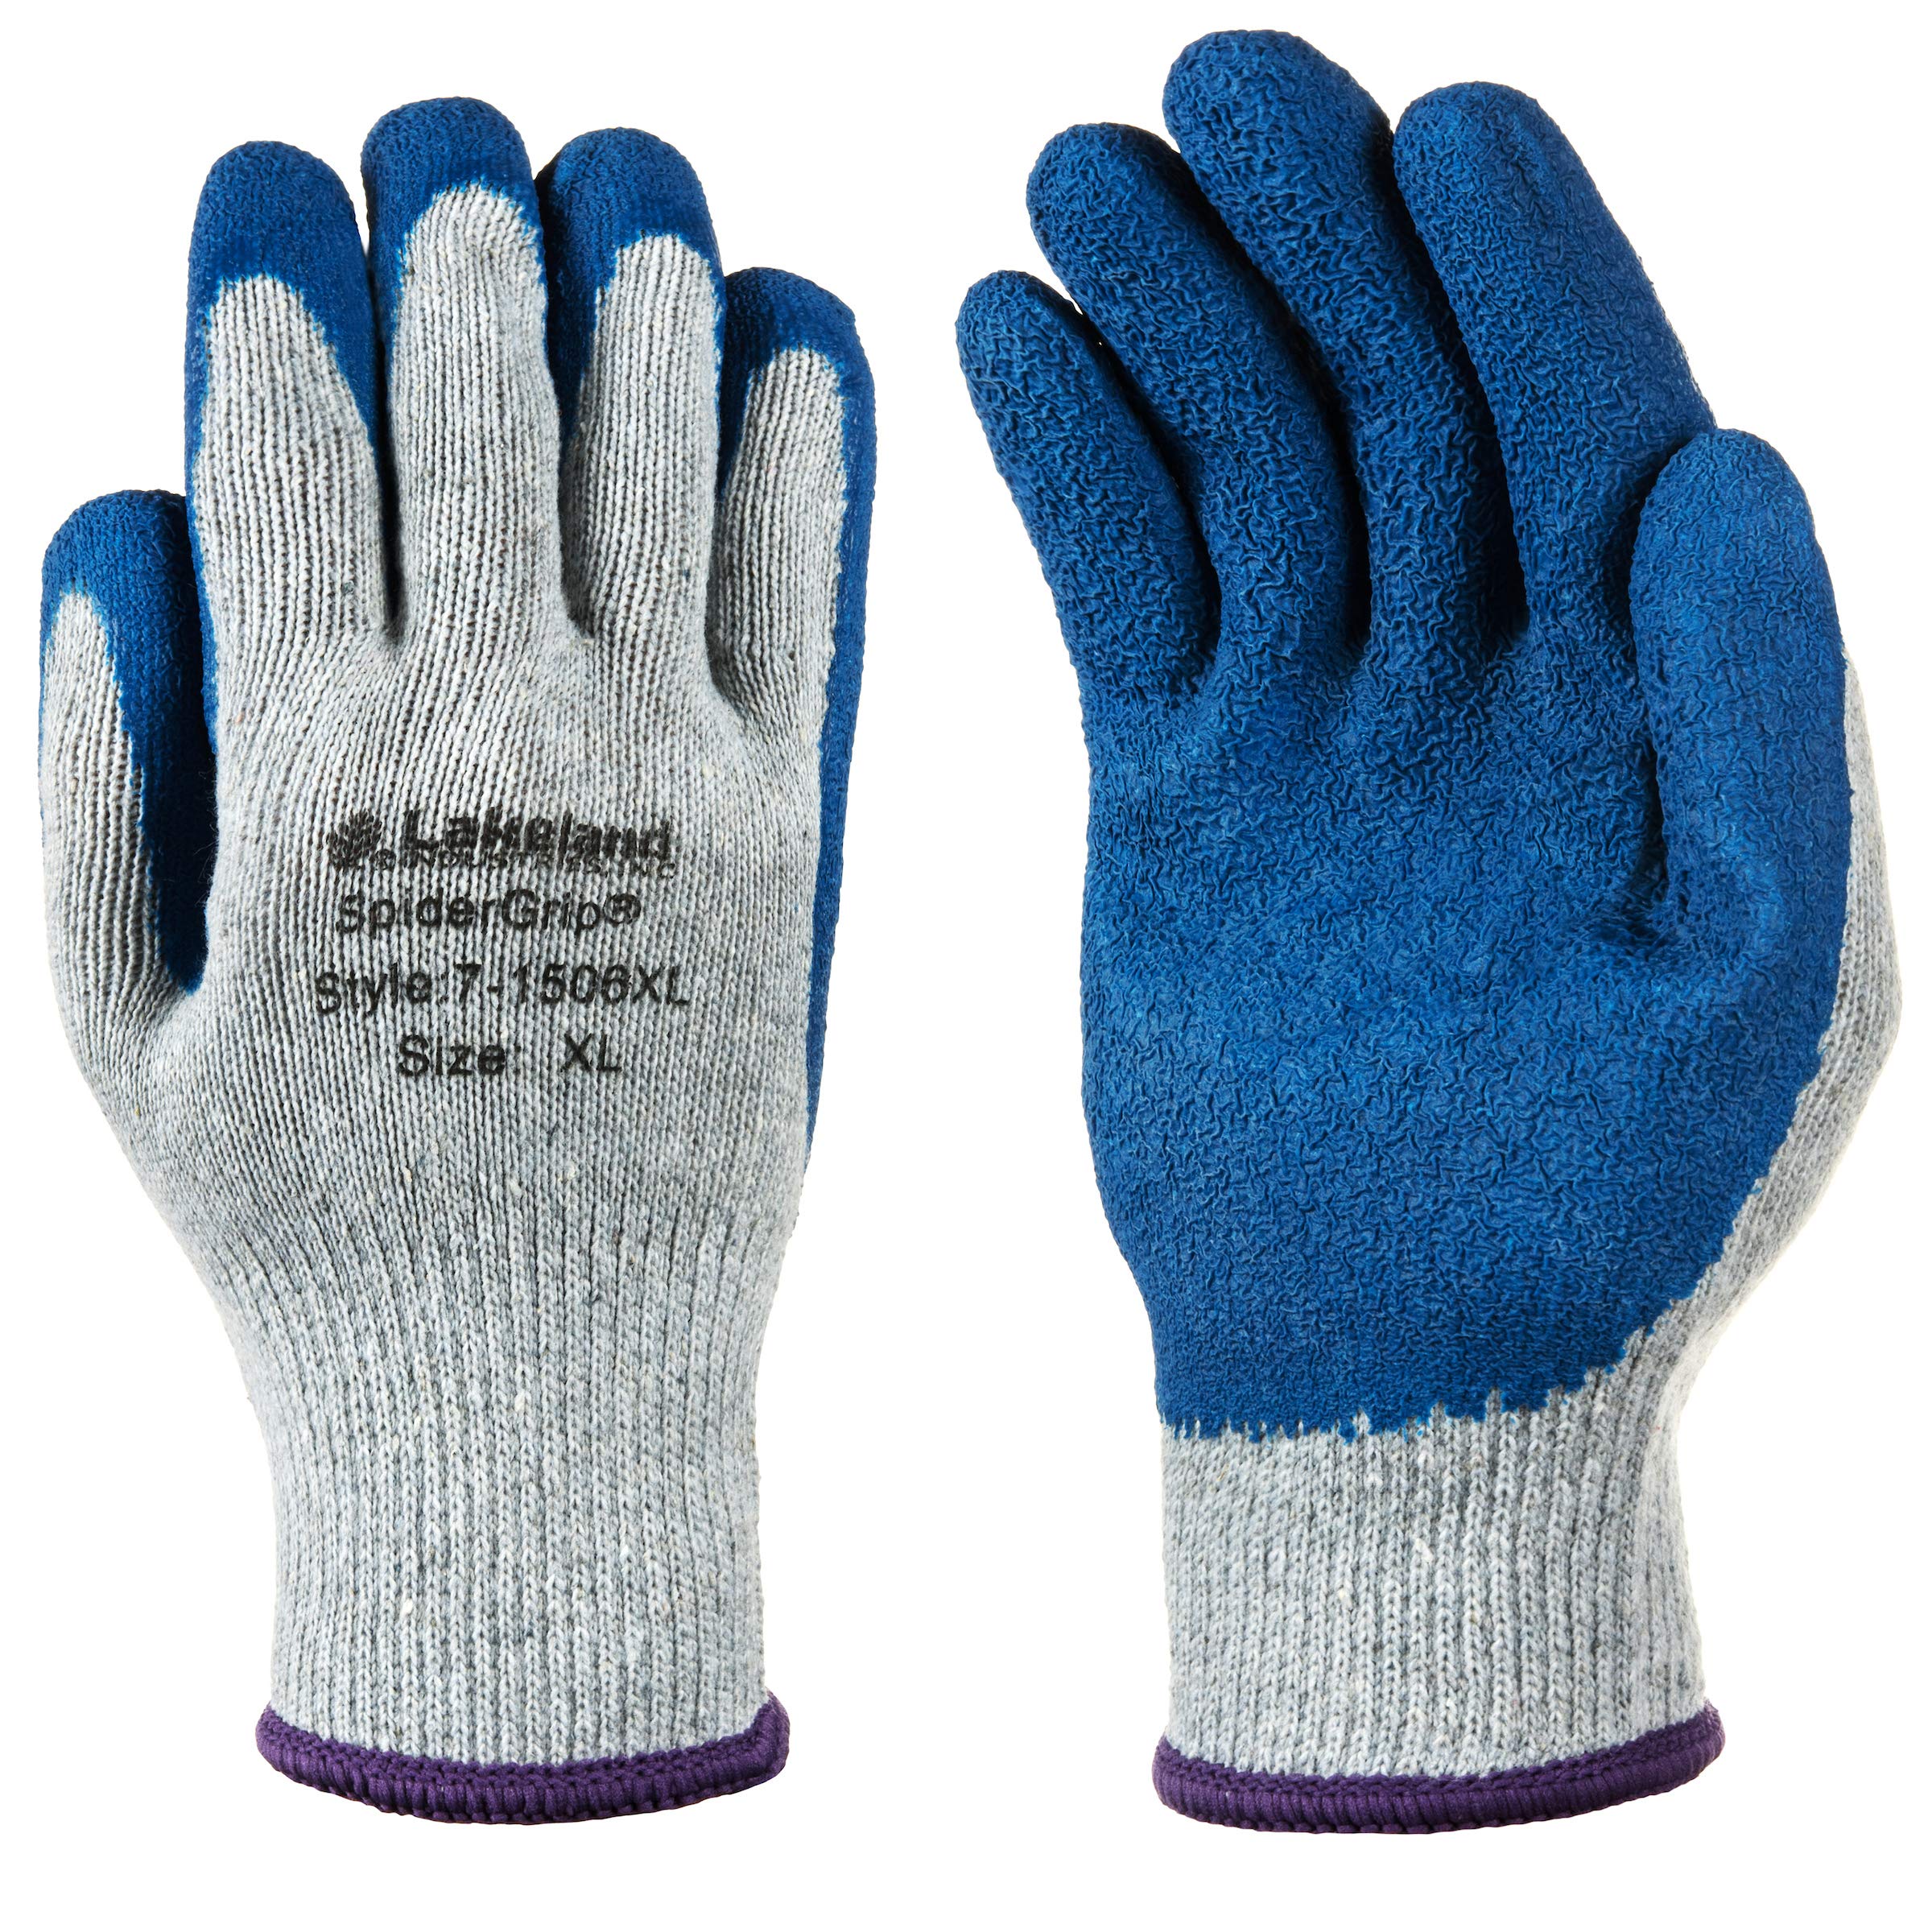 Lakeland Industries, Inc 7-1506XL Lakeland 7-1506 SpiderGrip General Work Glove, X-Large, Grey/Blue (12 Pair)